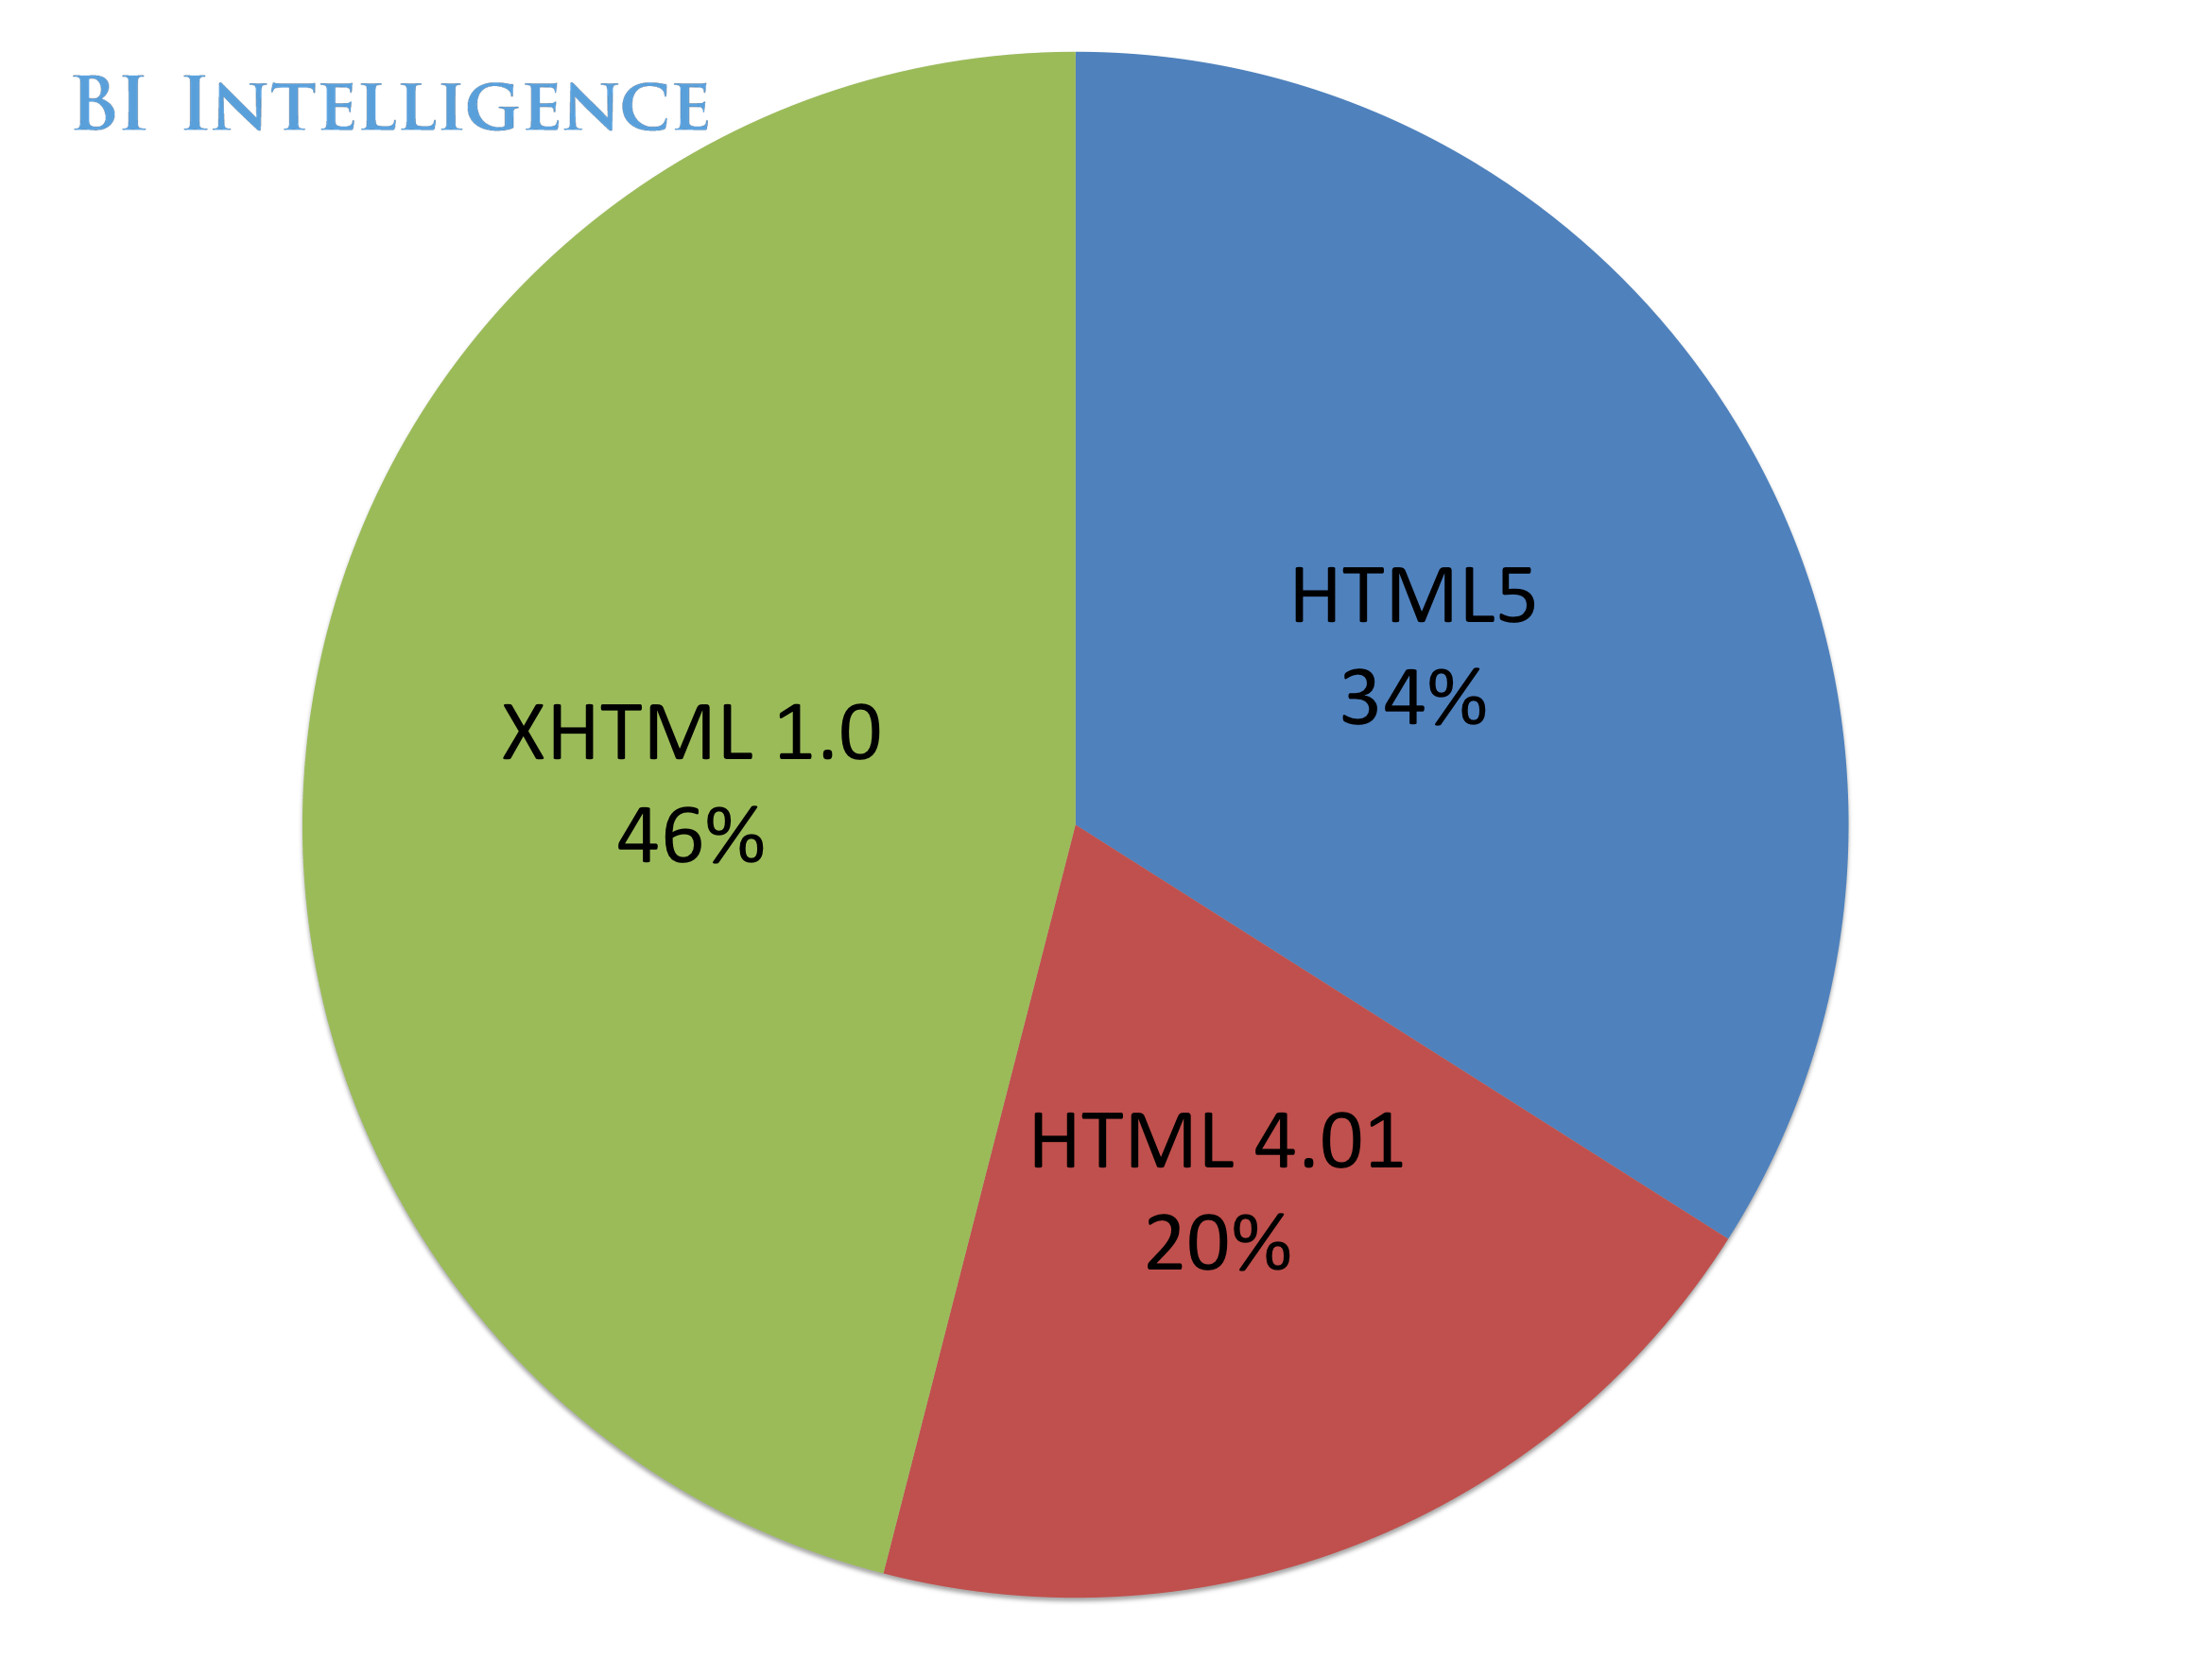 Chart in BI report on HTML5 adoption